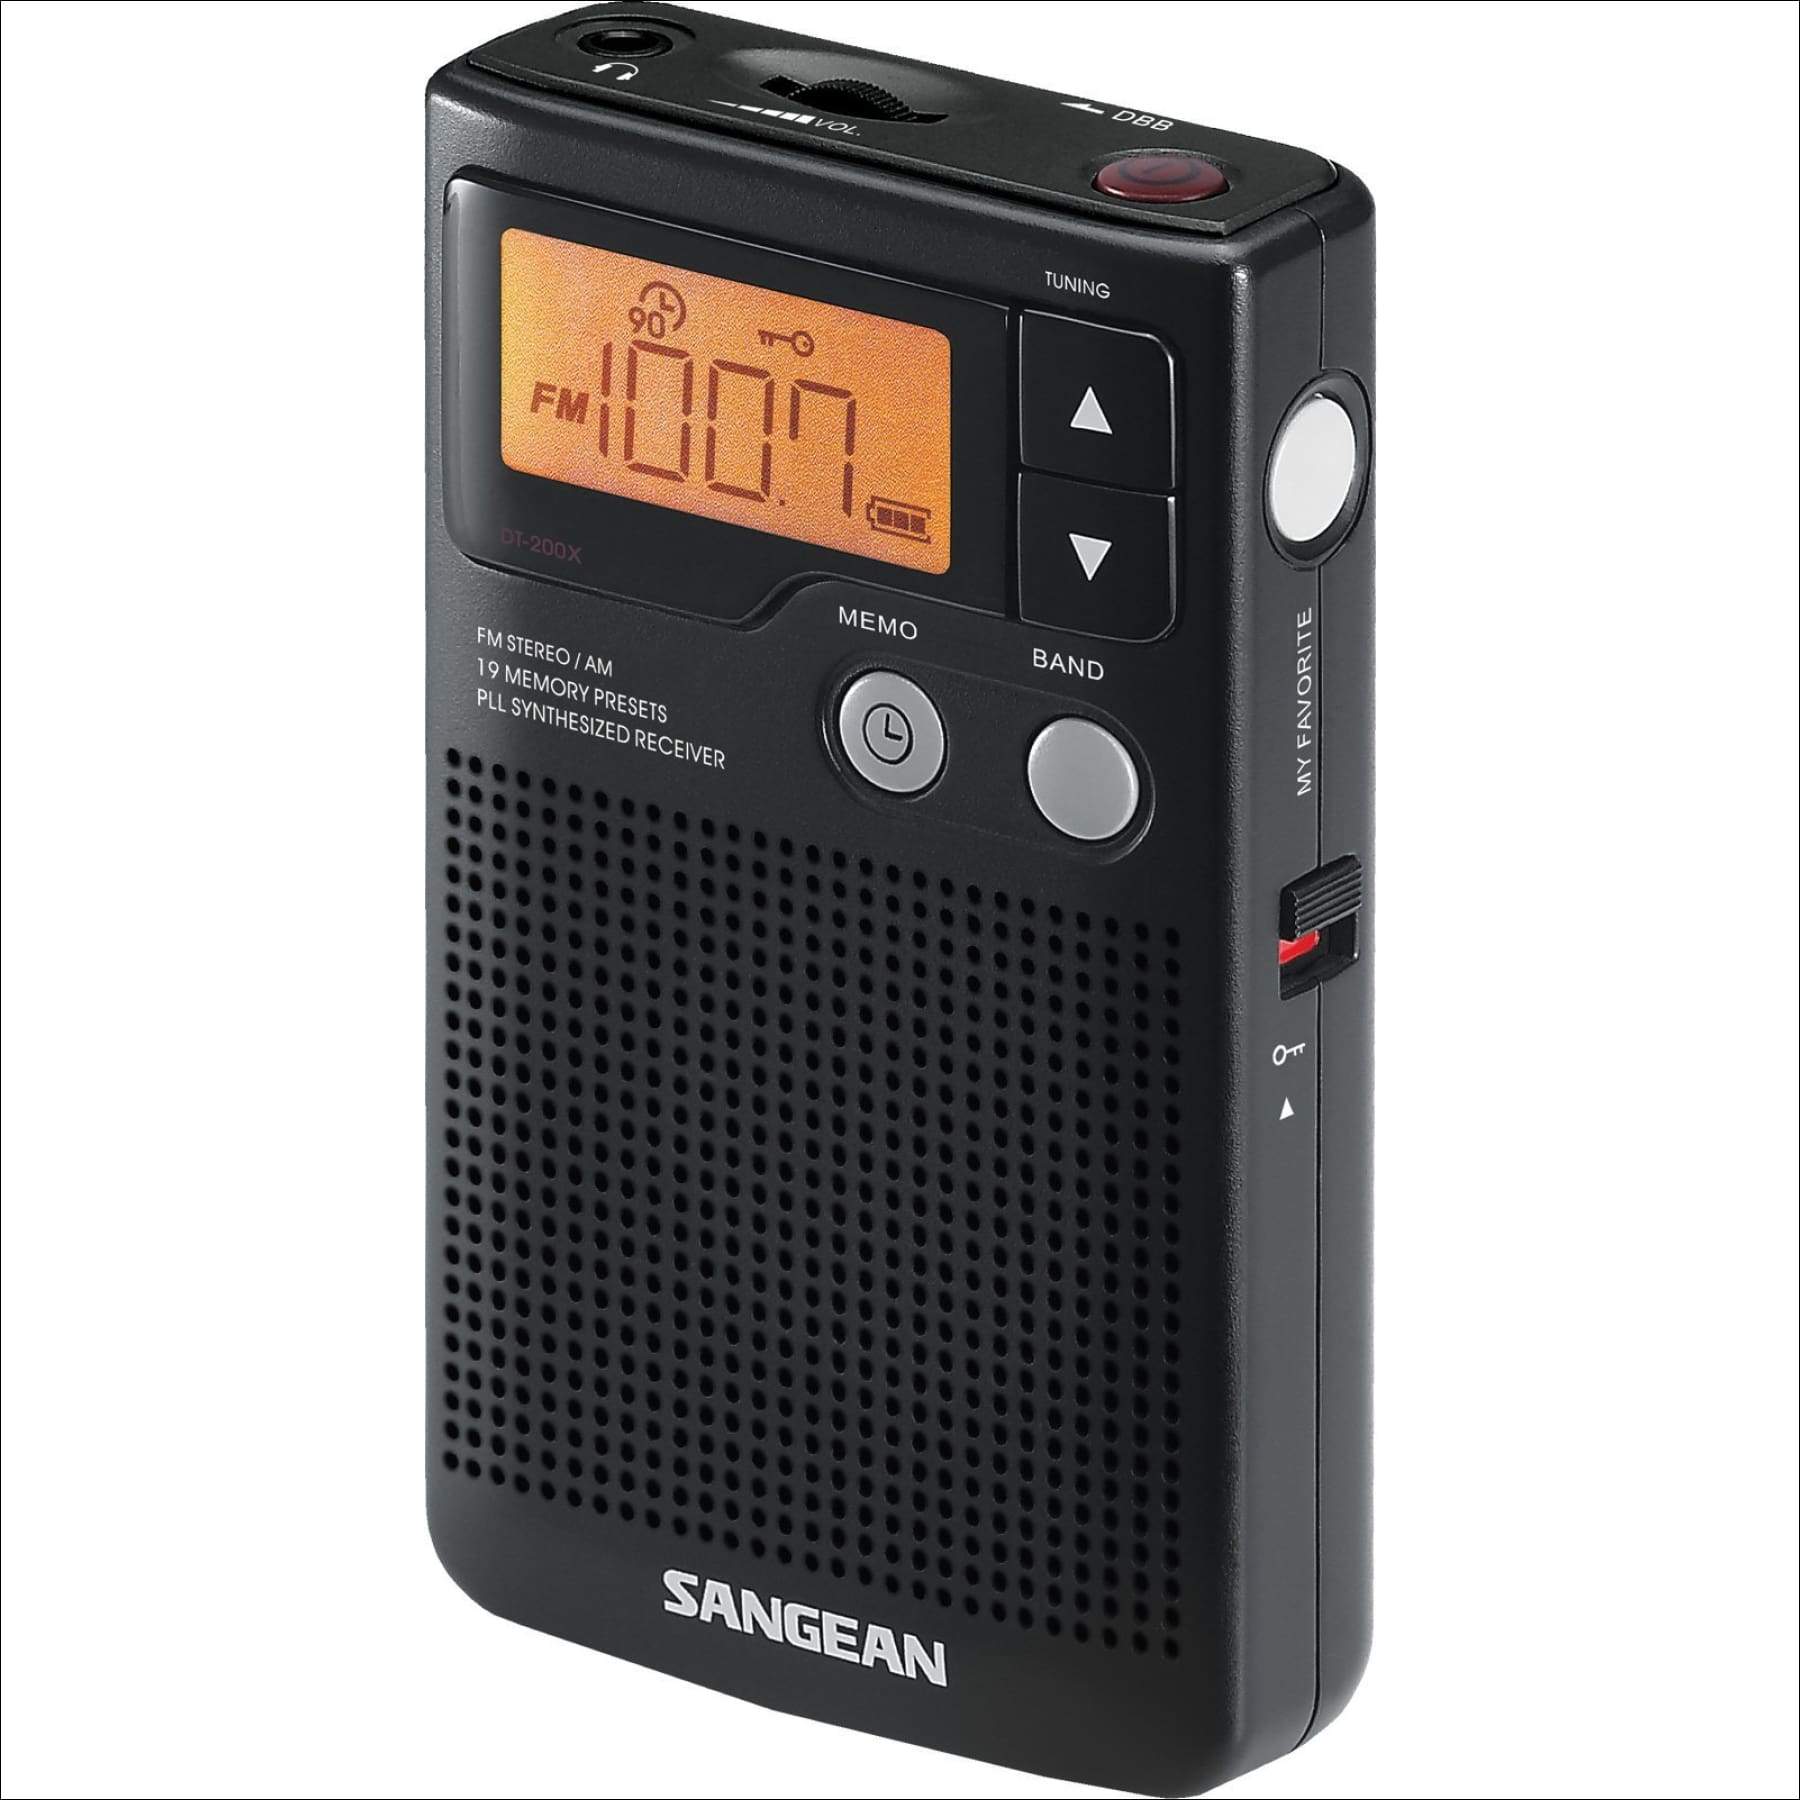 Sangean DT-200X FM-Stereo/AM Digital Tuning Pocket Radio - image 3 of 4